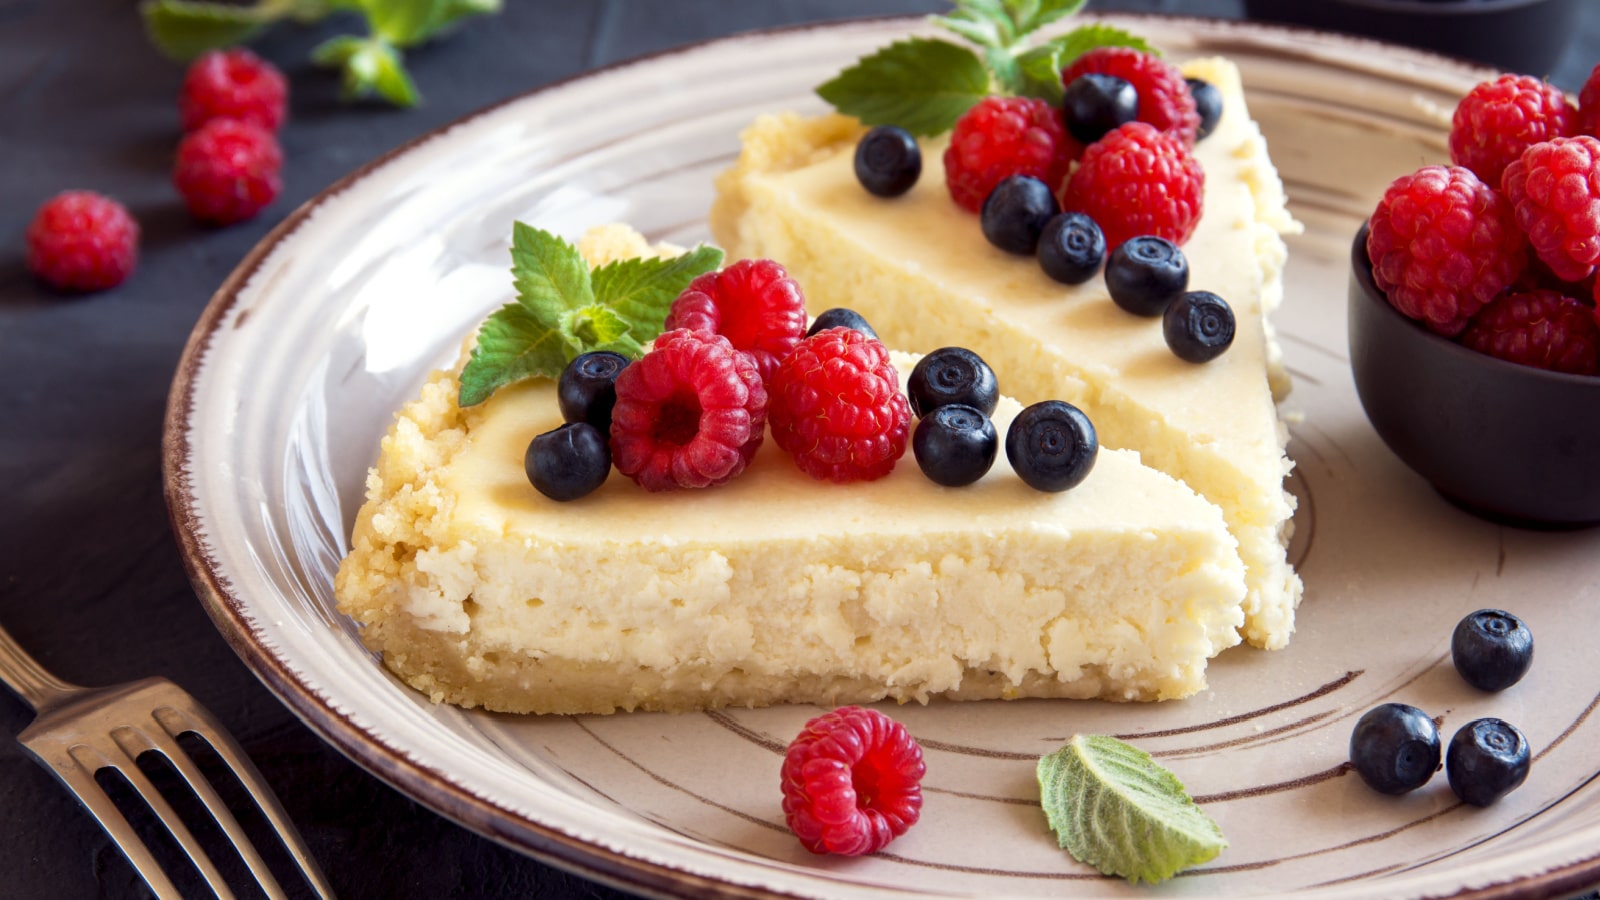 Homemade cheesecake with fresh berries and mint for dessert - healthy organic summer dessert pie cheesecake. Cheese cake.